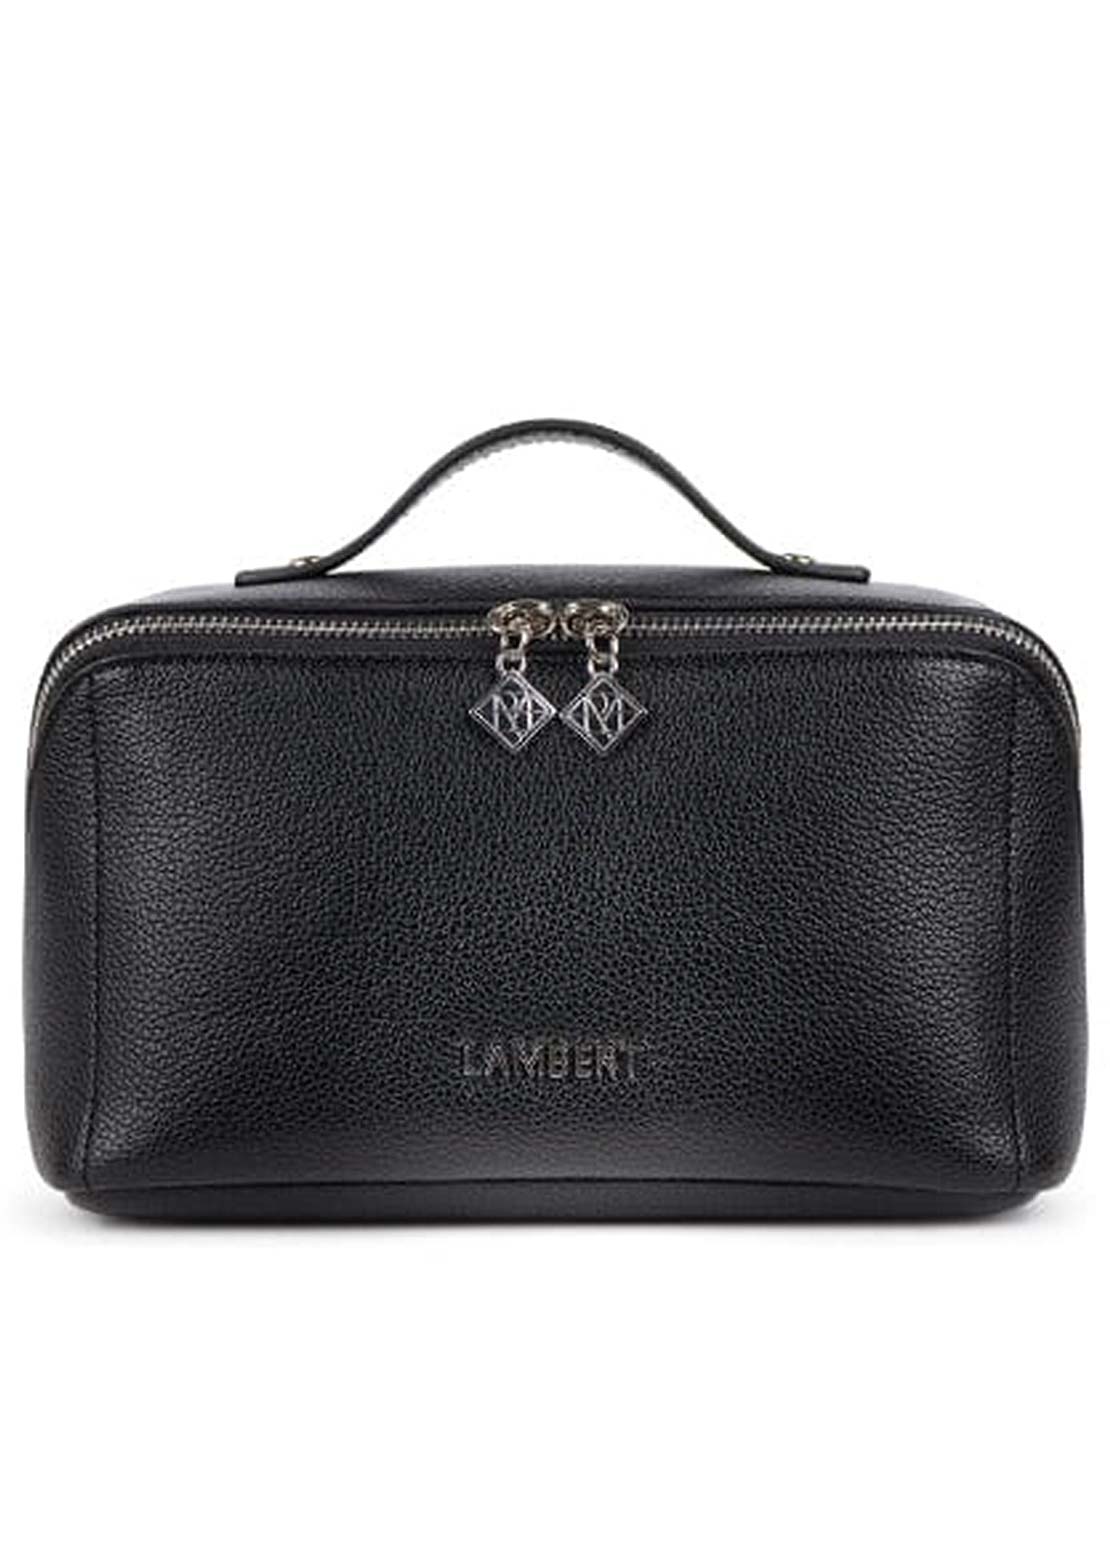 Lambert Women's Jolie Cosmetic Bag Black Pebble